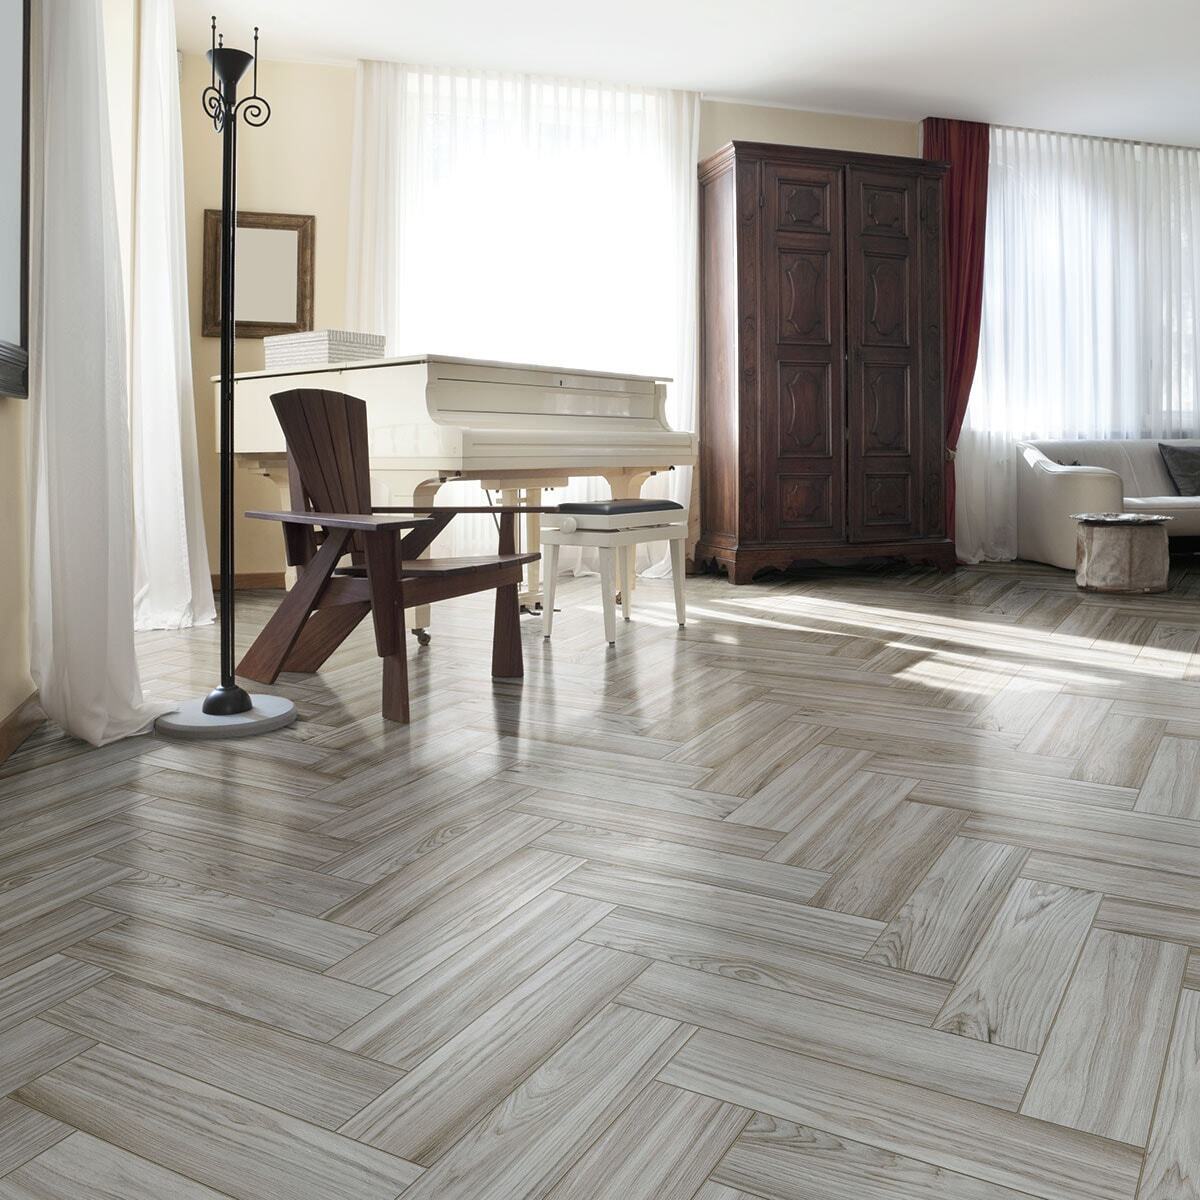 Wood tile collection: wood grain and wood look ceramic tile. Shop now! —  Stone & Tile Shoppe, Inc.